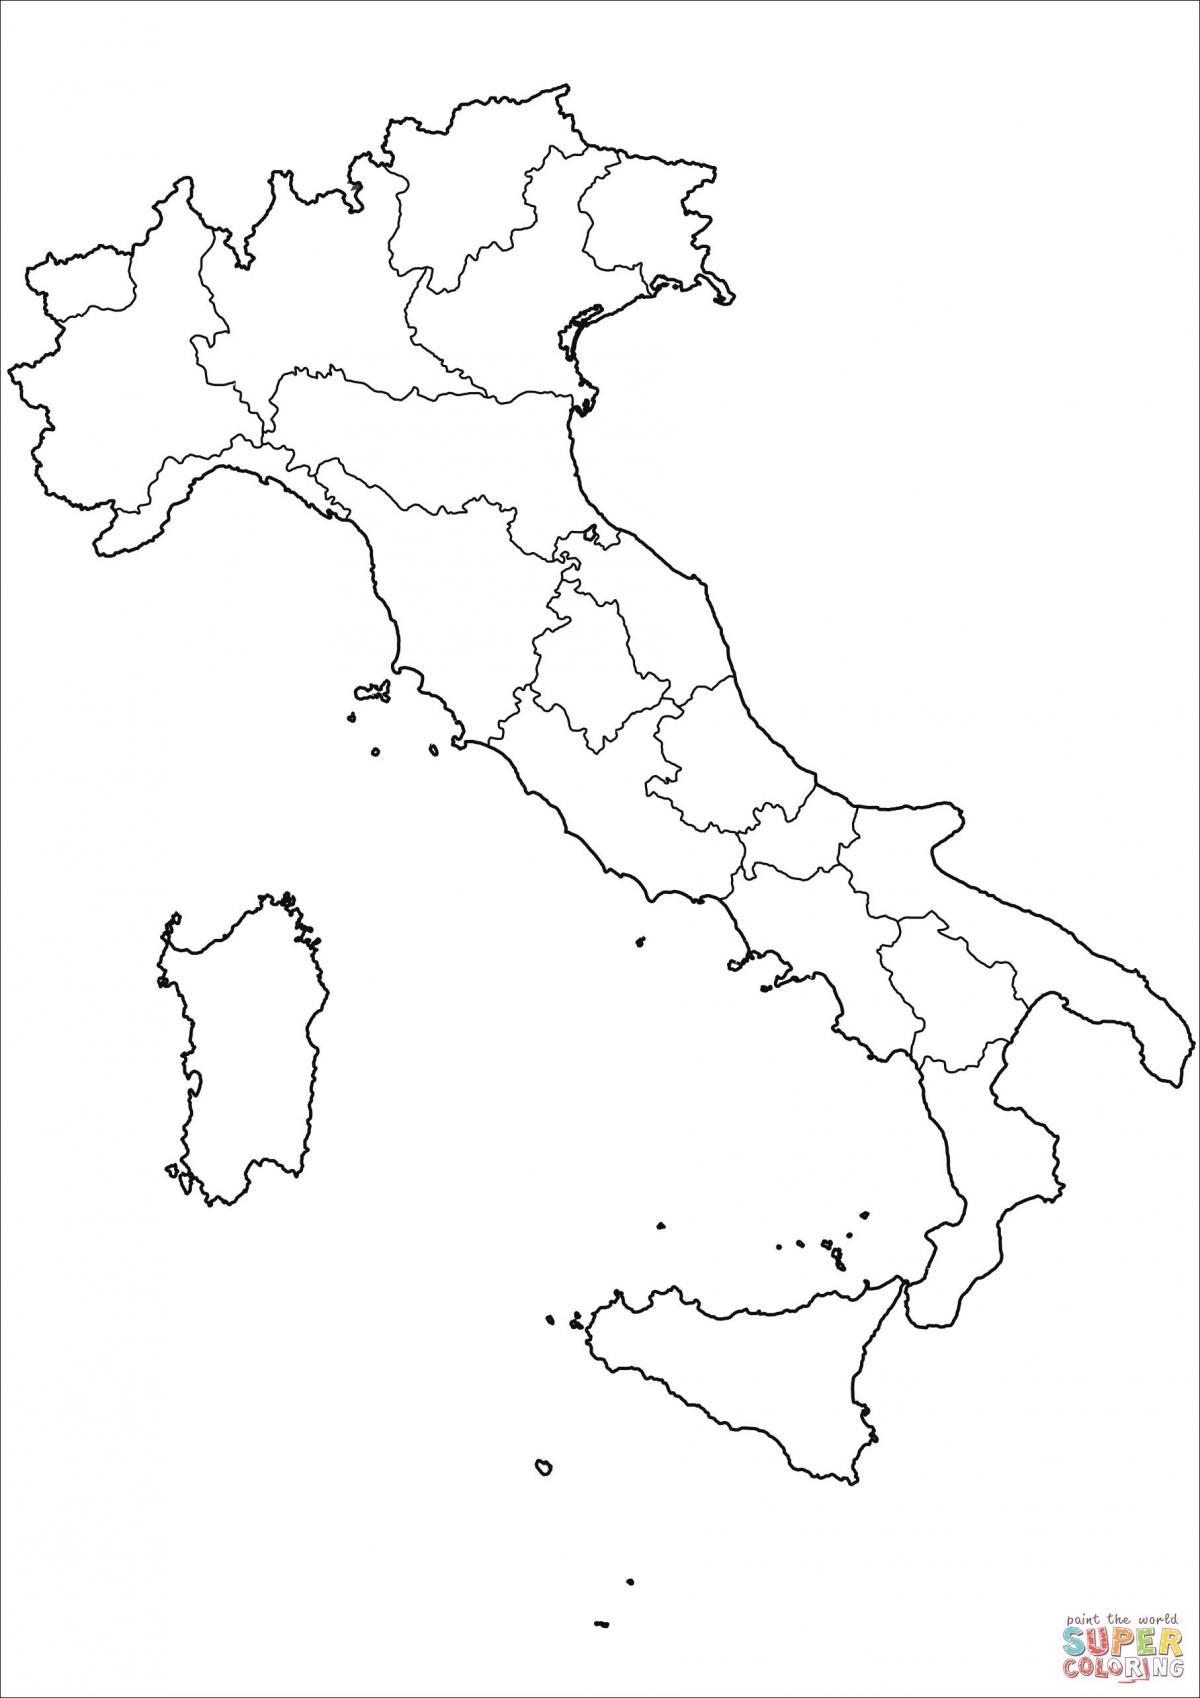 Lege kaart van Italië